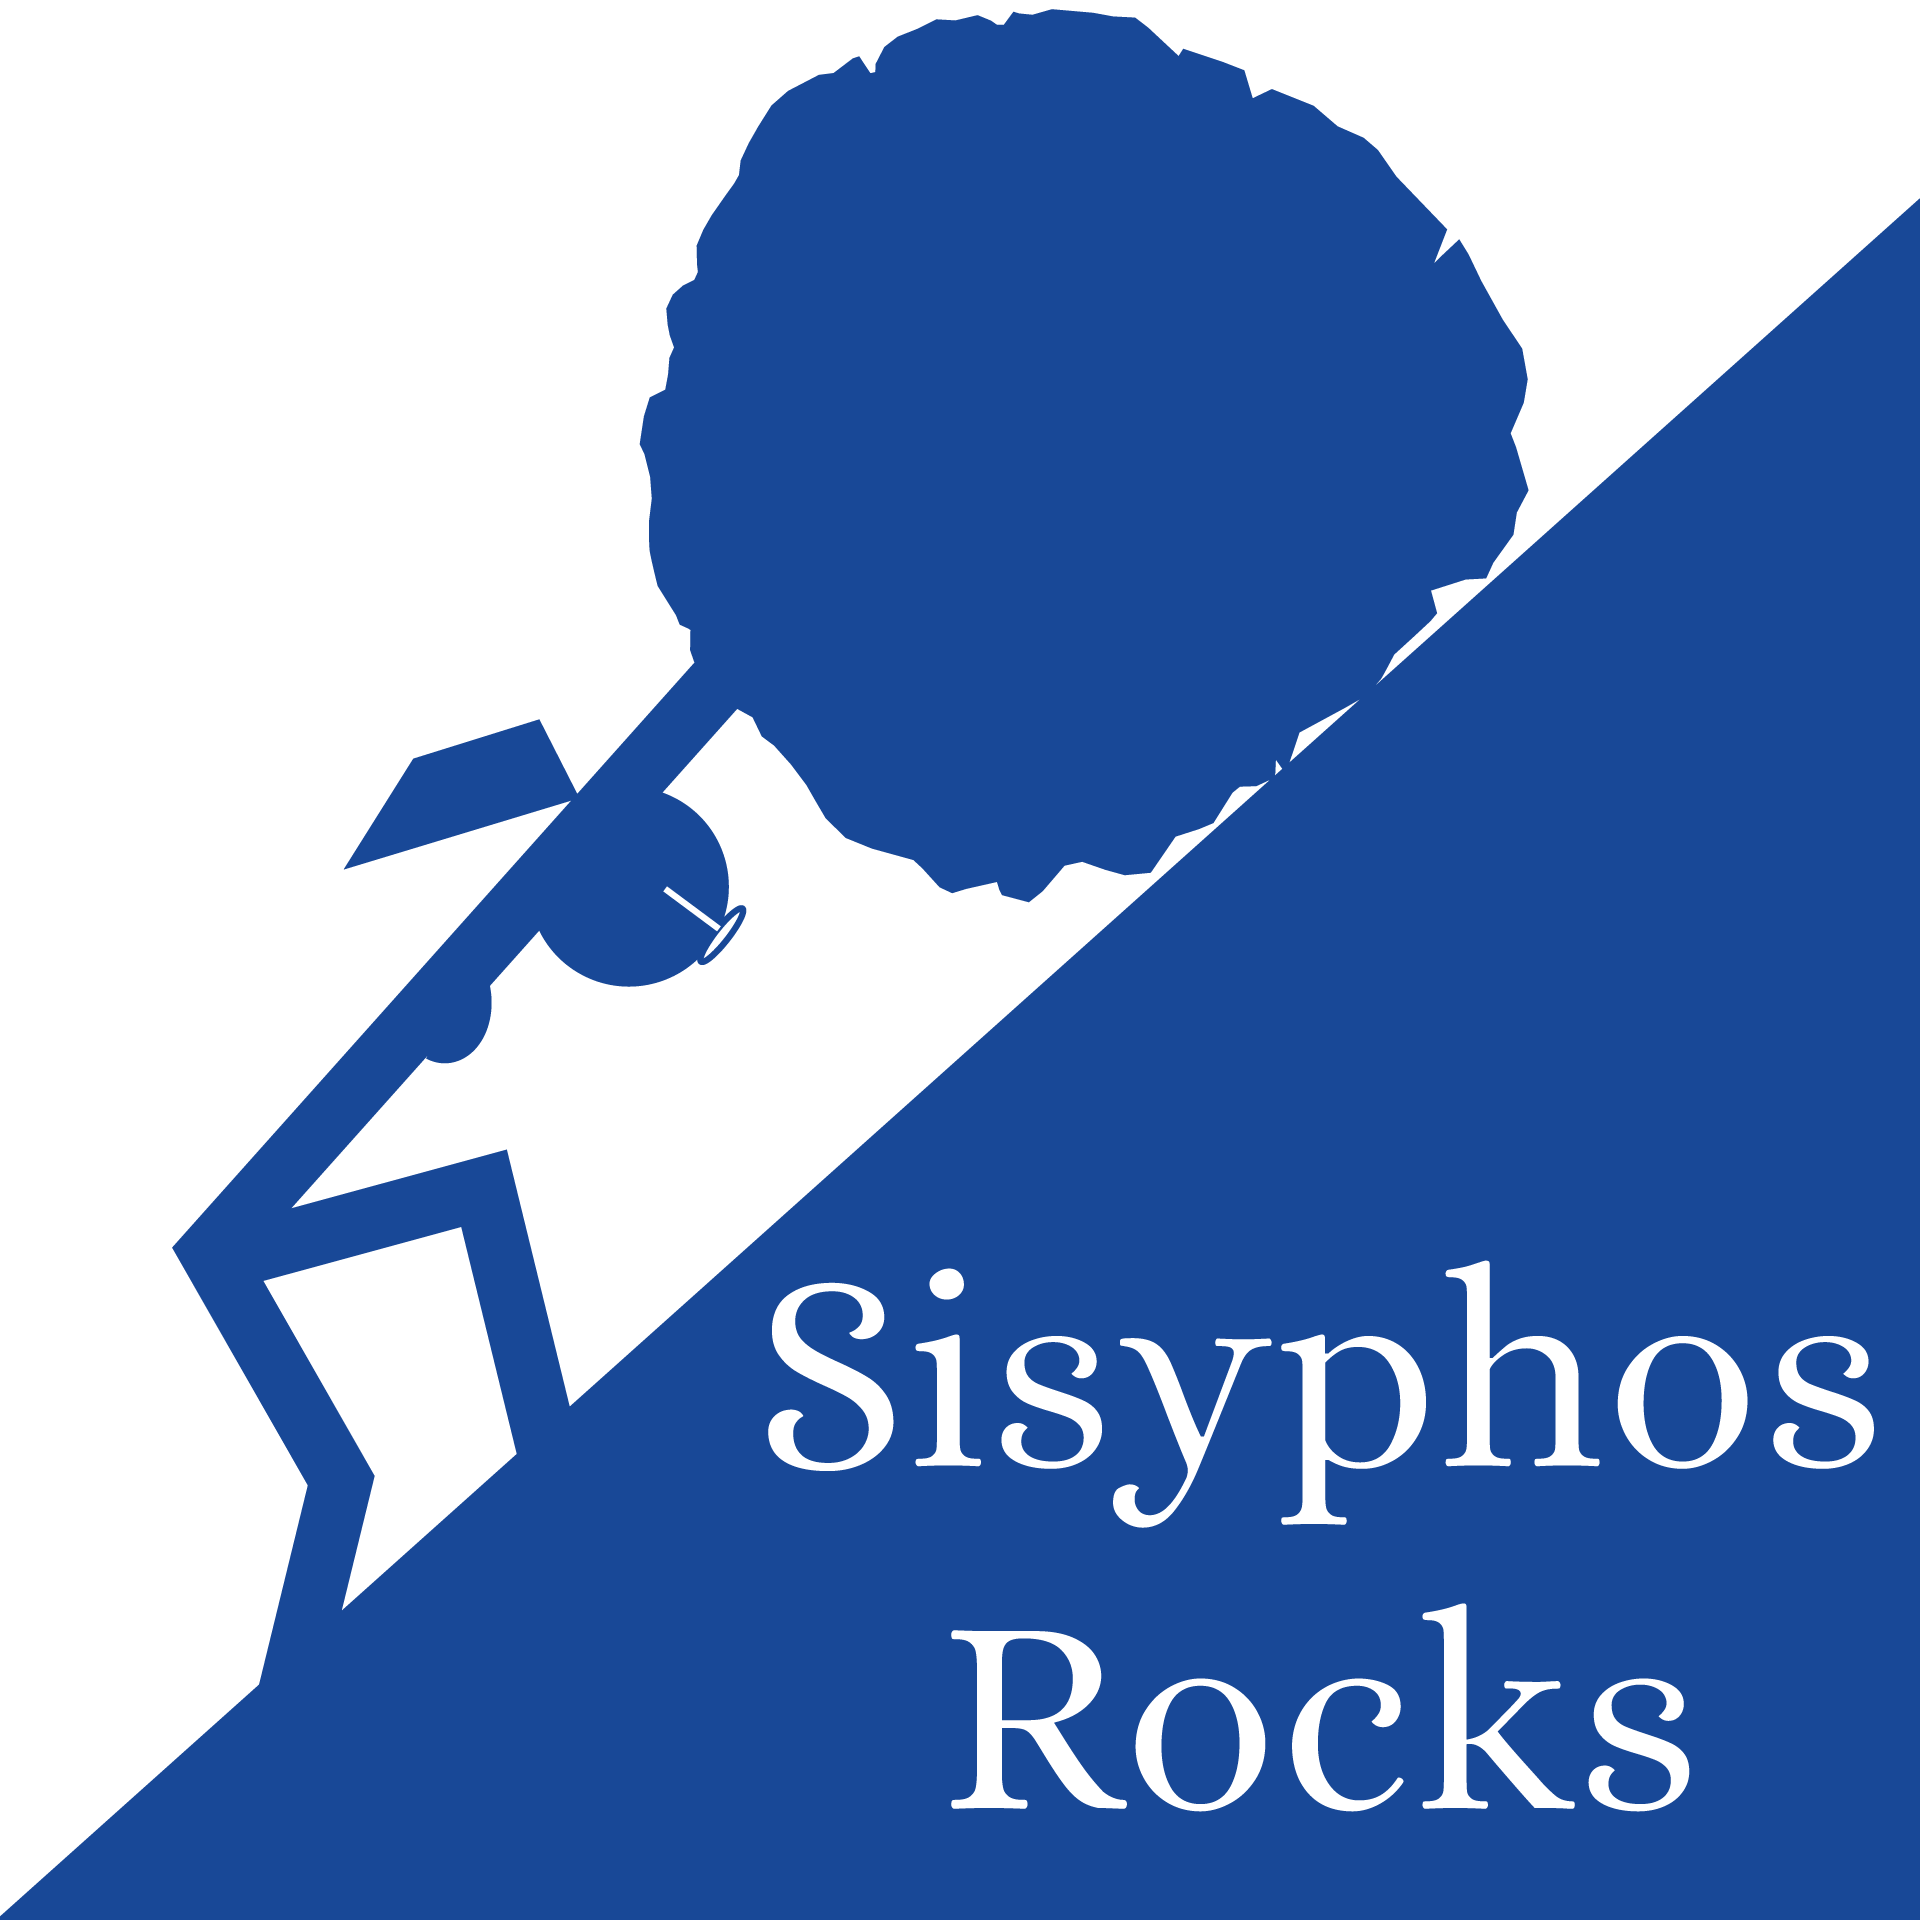 Sisyphos Rocks